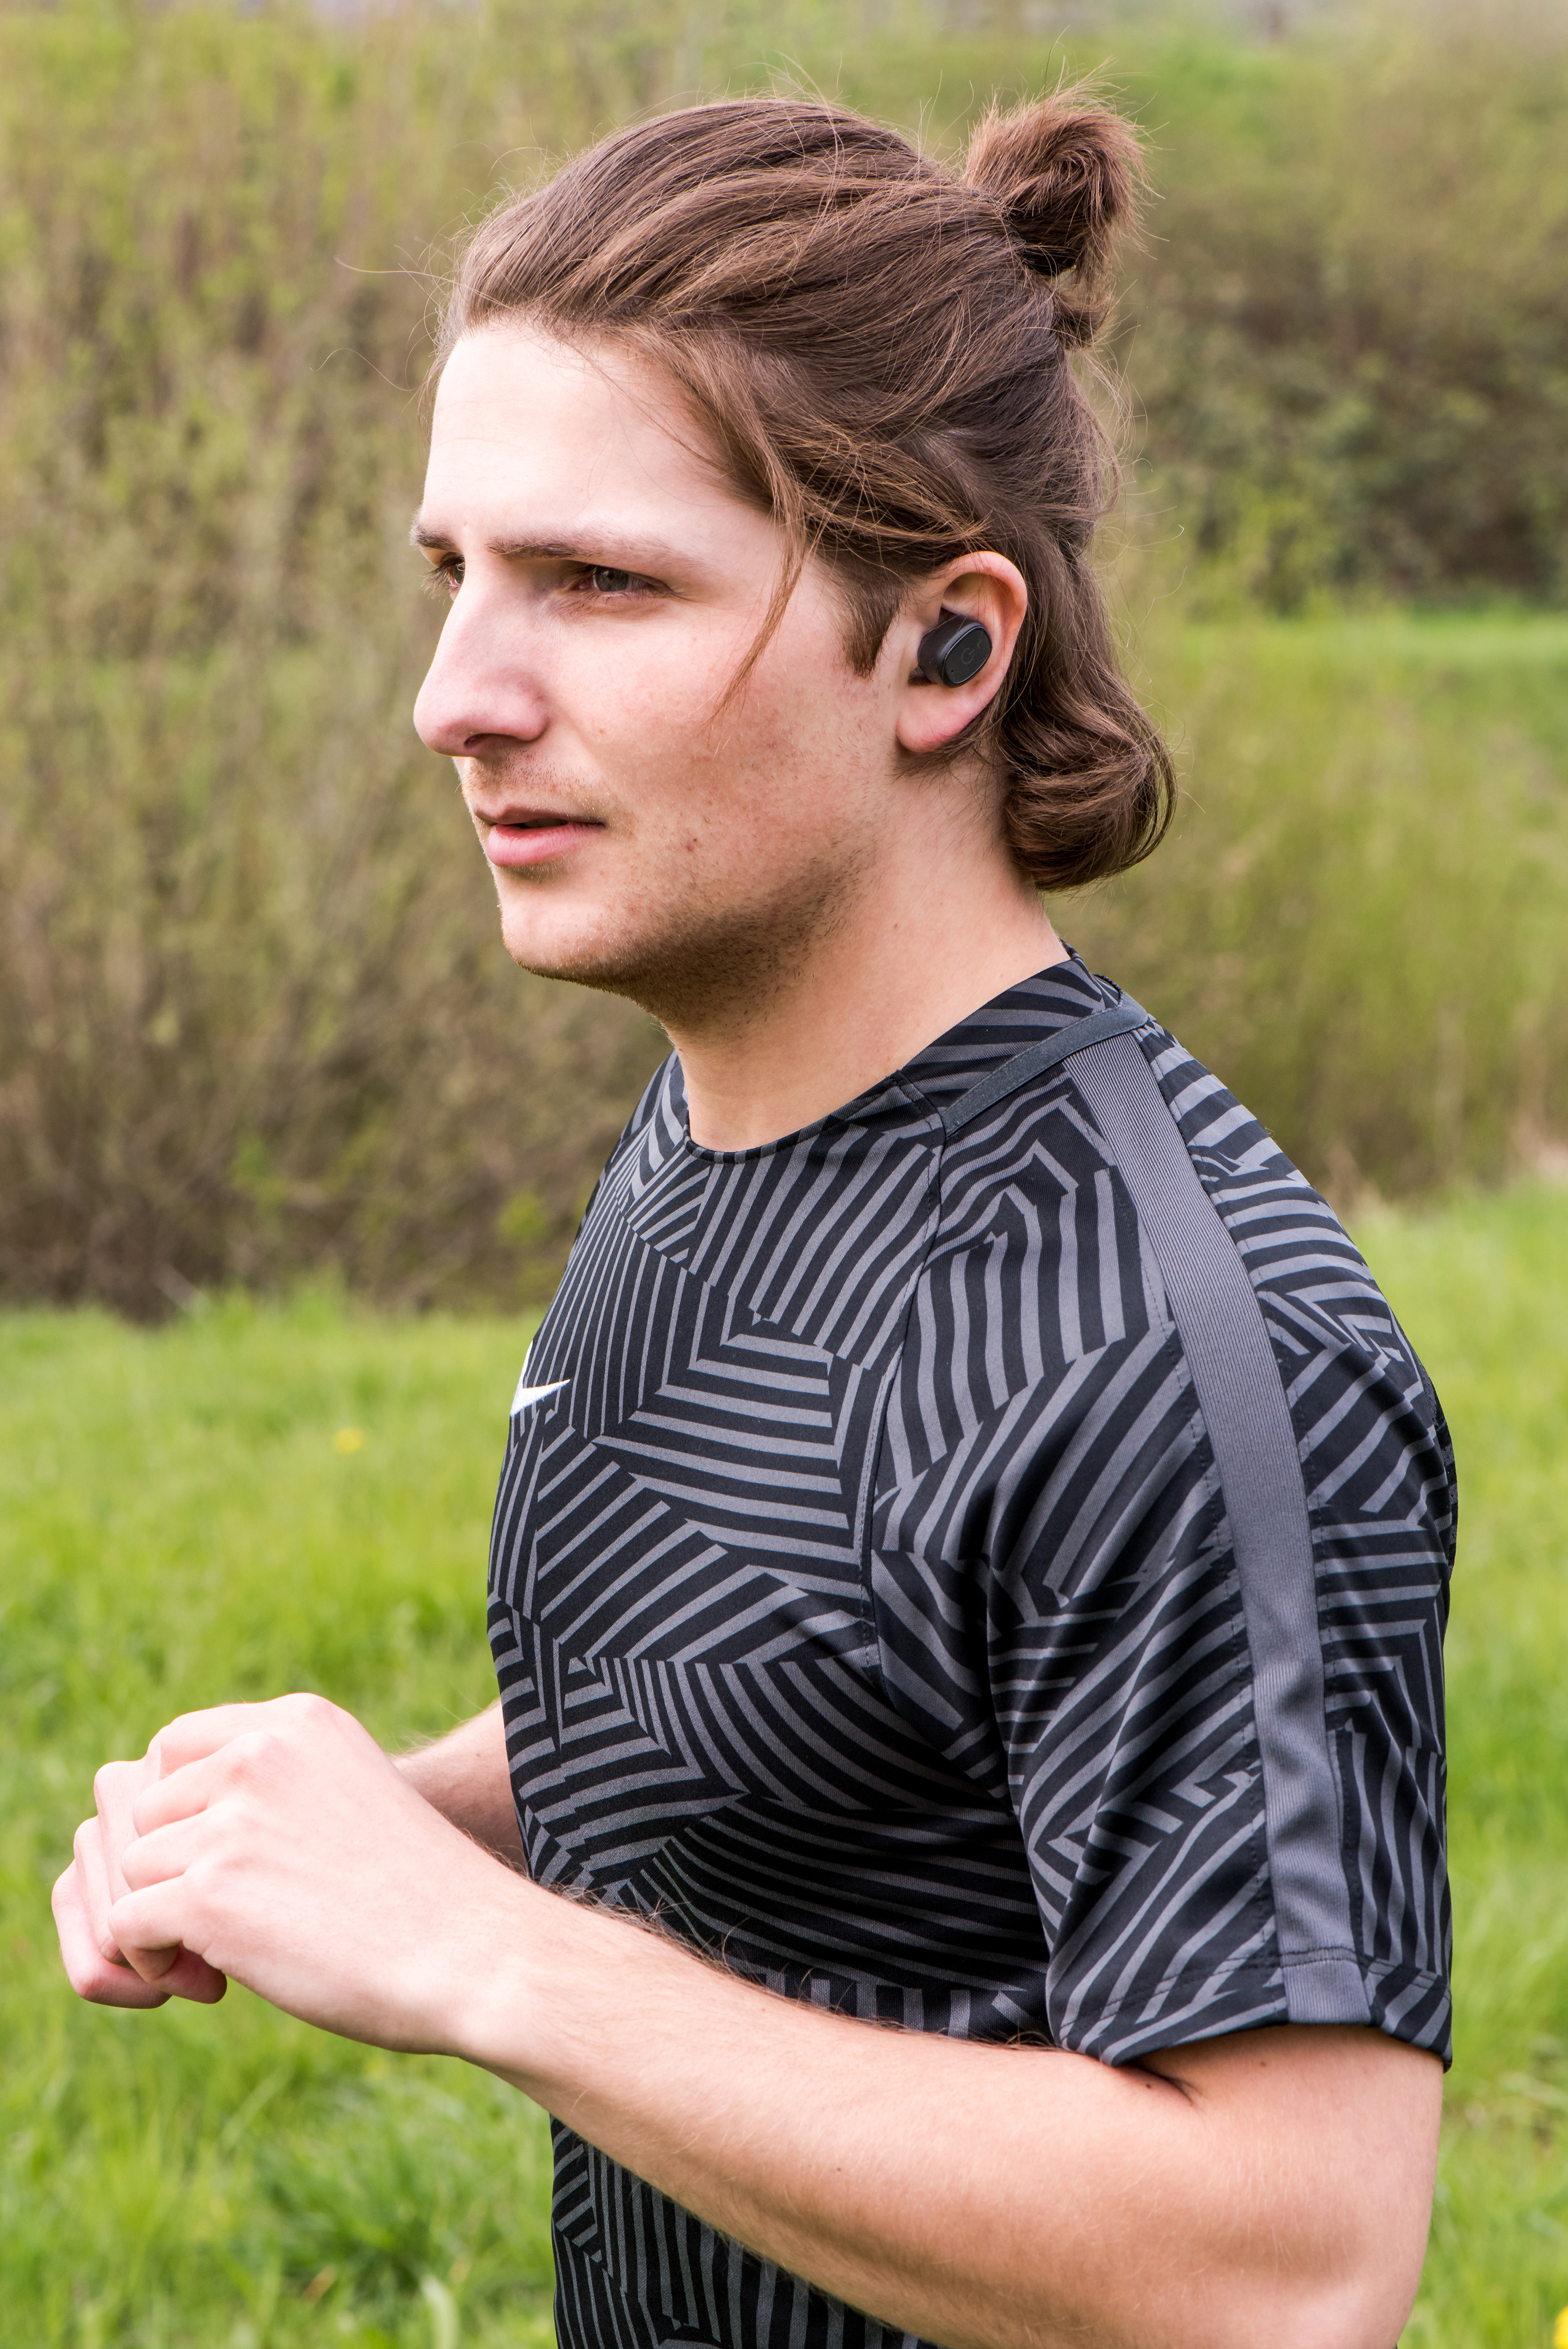 LENCO EPB-440BK, In-ear Bluetooth Headphone Bluetooth Schwarz